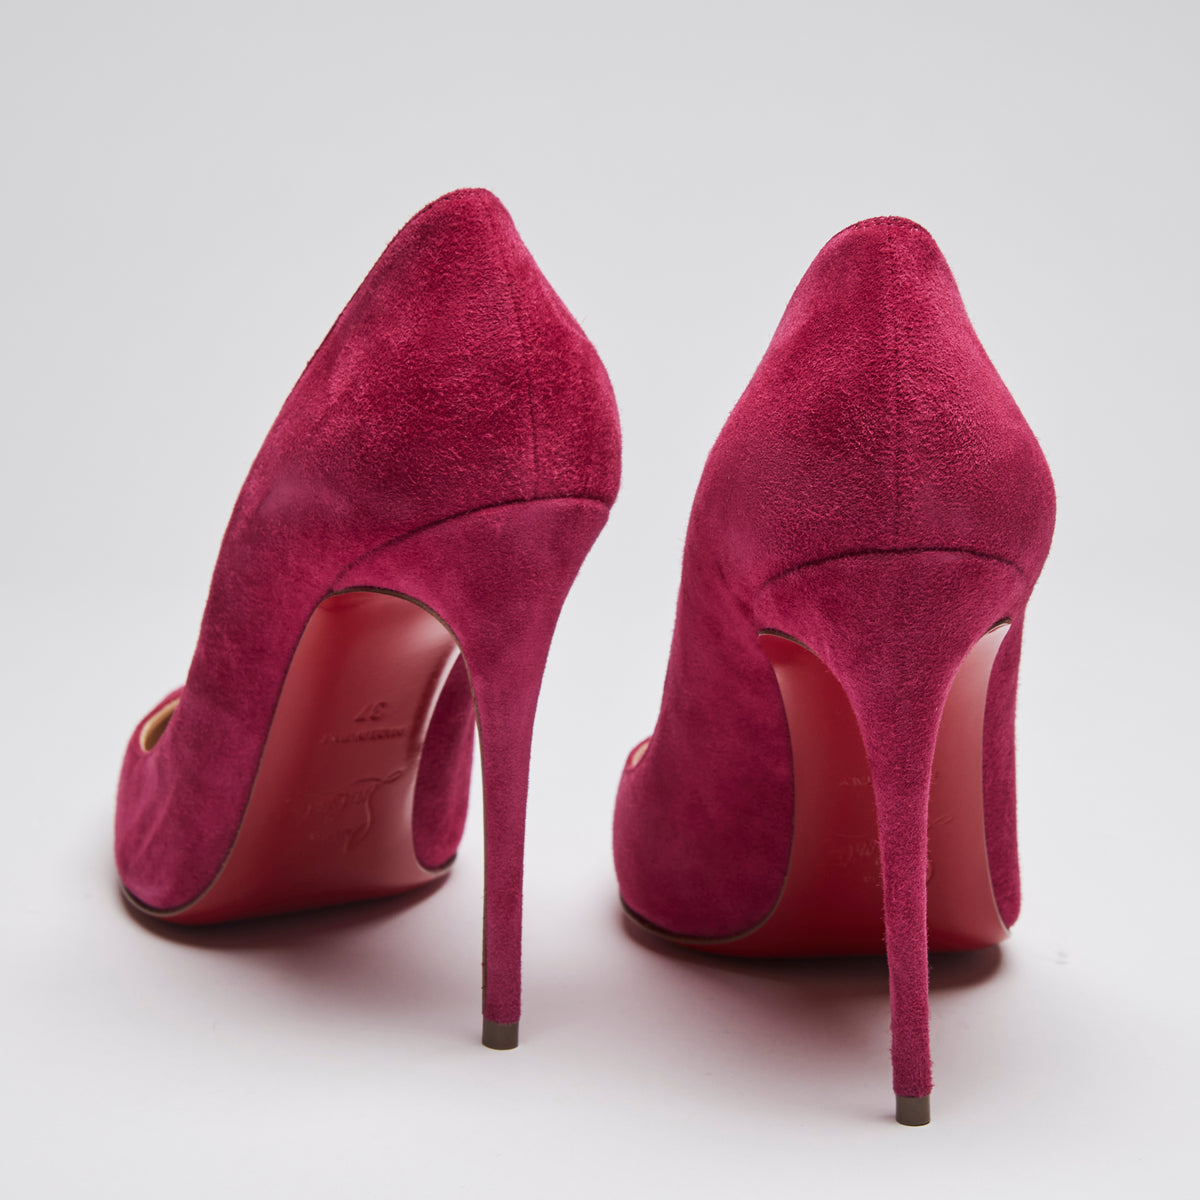 Excellent Pre-Loved Velvet Heels in Various Colors. (magenta pink, back)